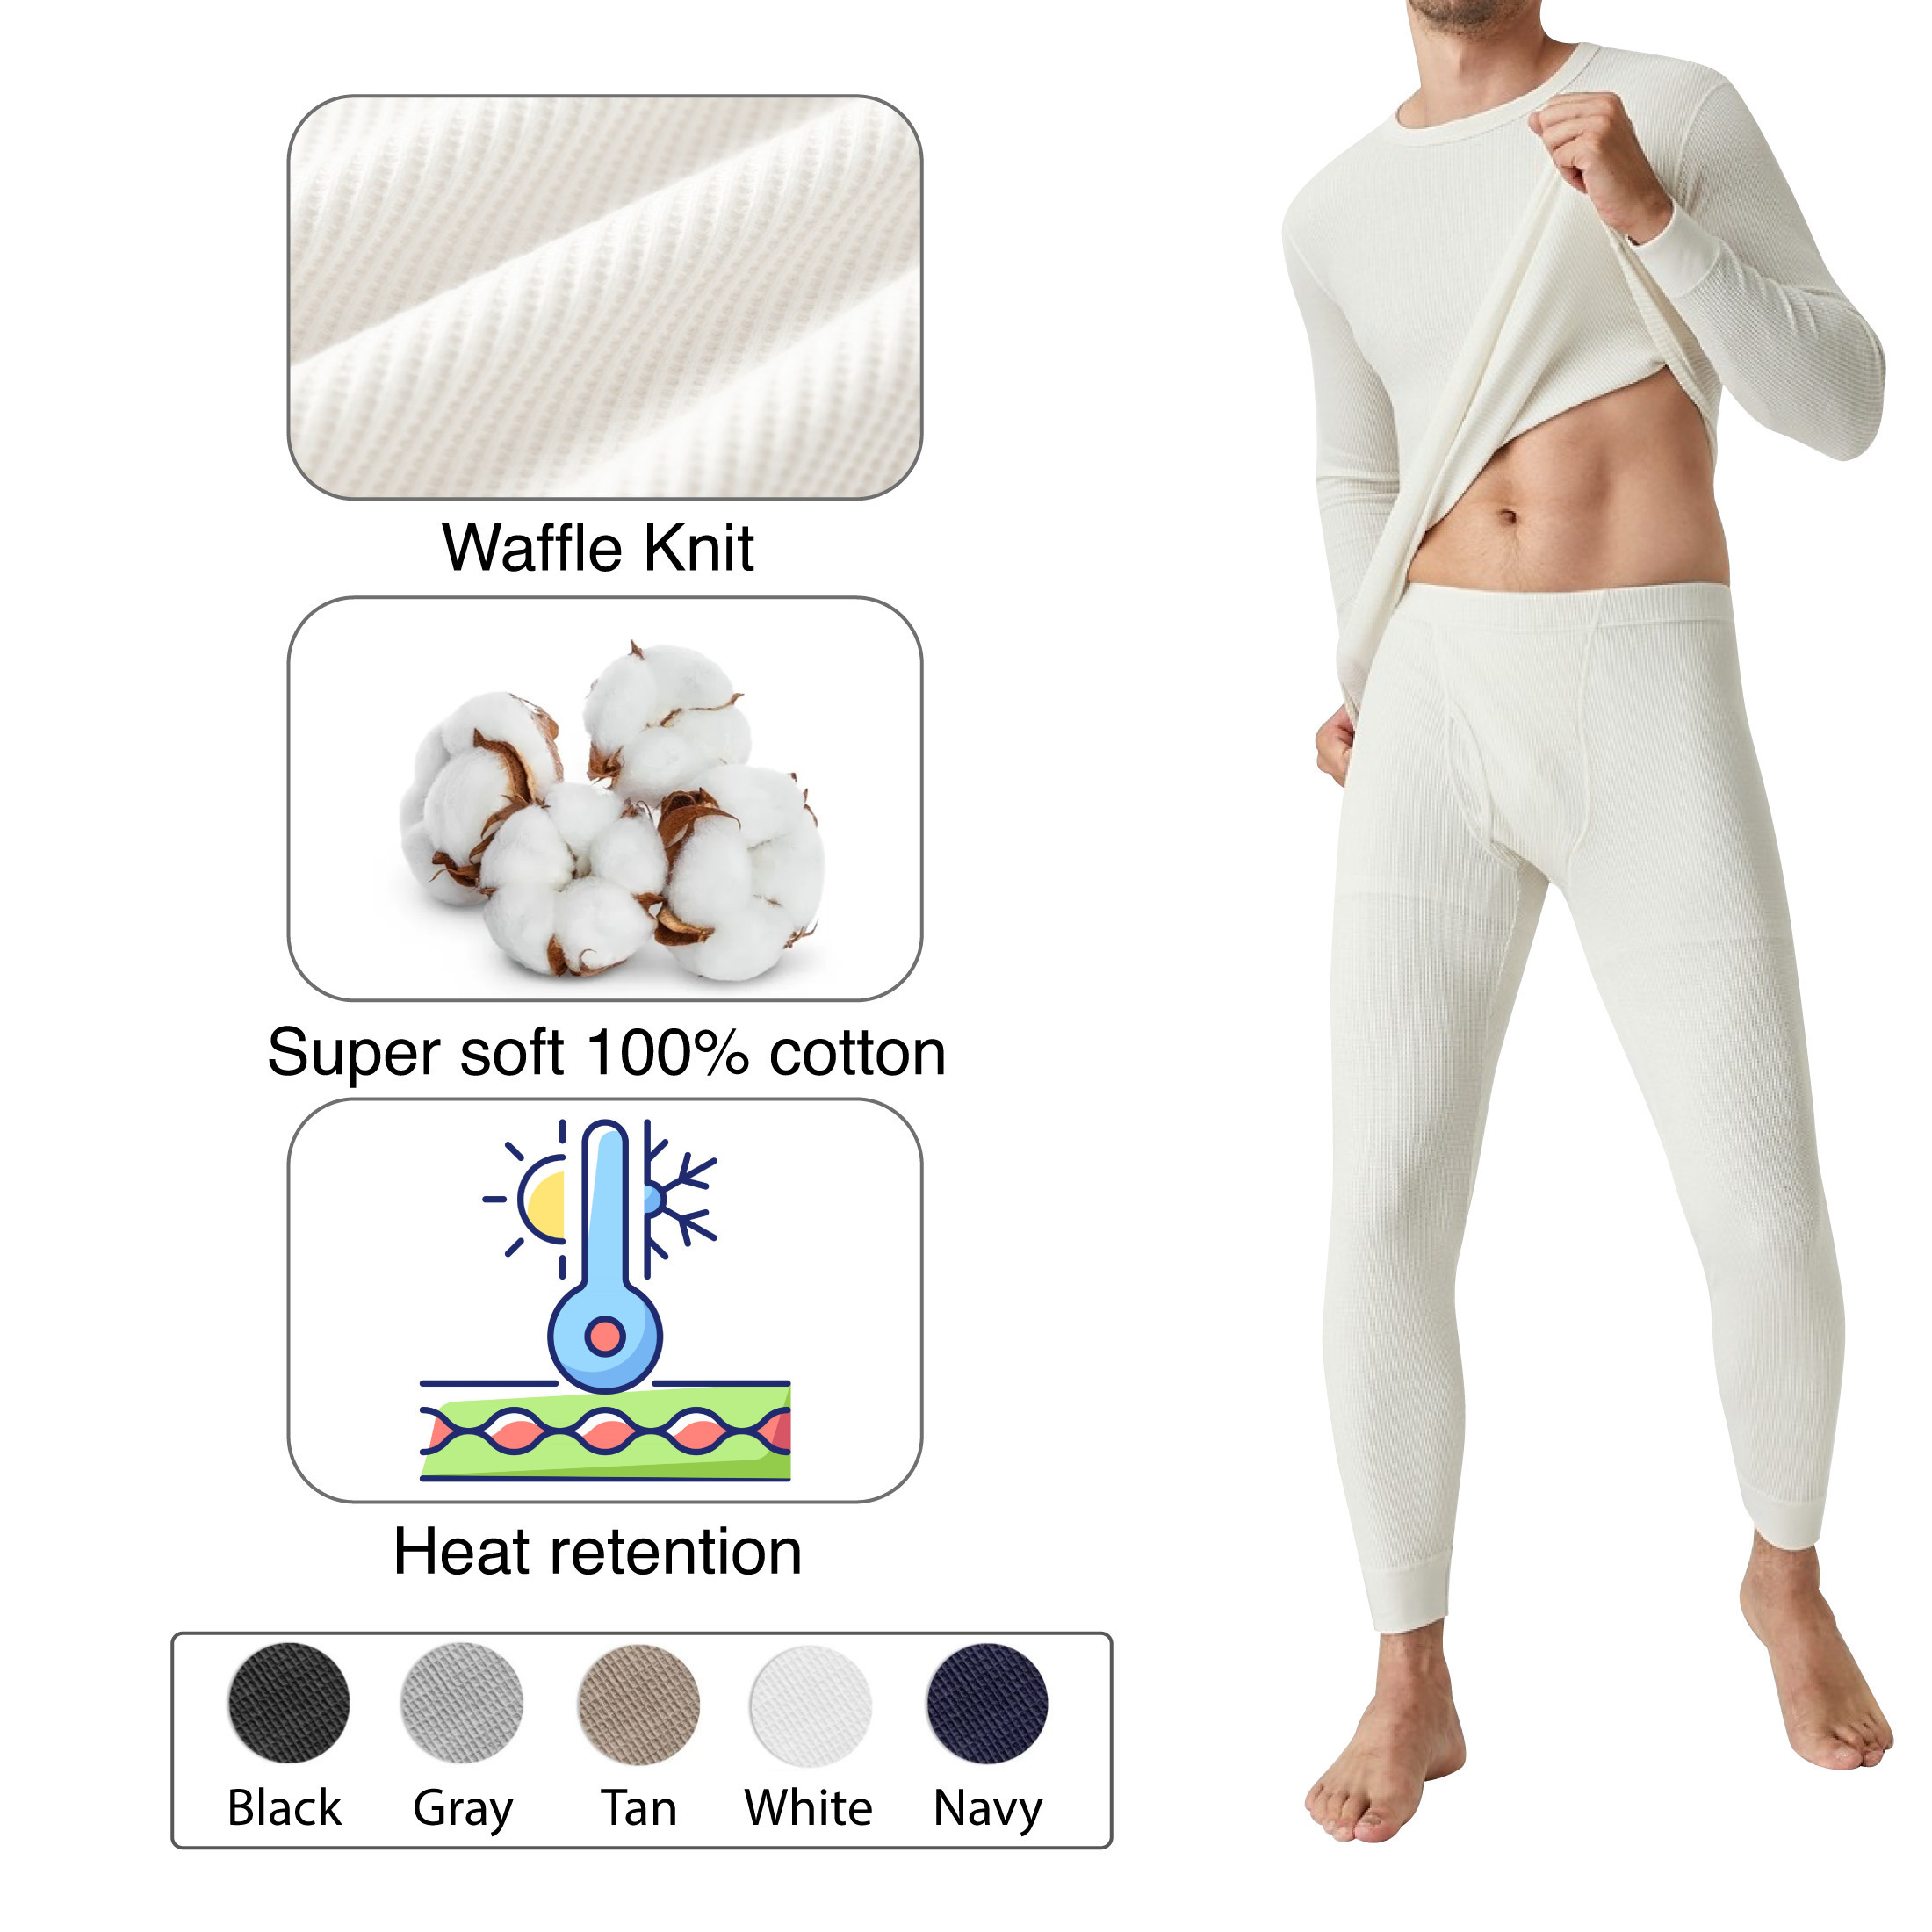 2-Piece: Men's Super Soft Cotton Waffle Knit Winter Thermal Underwear Set - Grey, Large